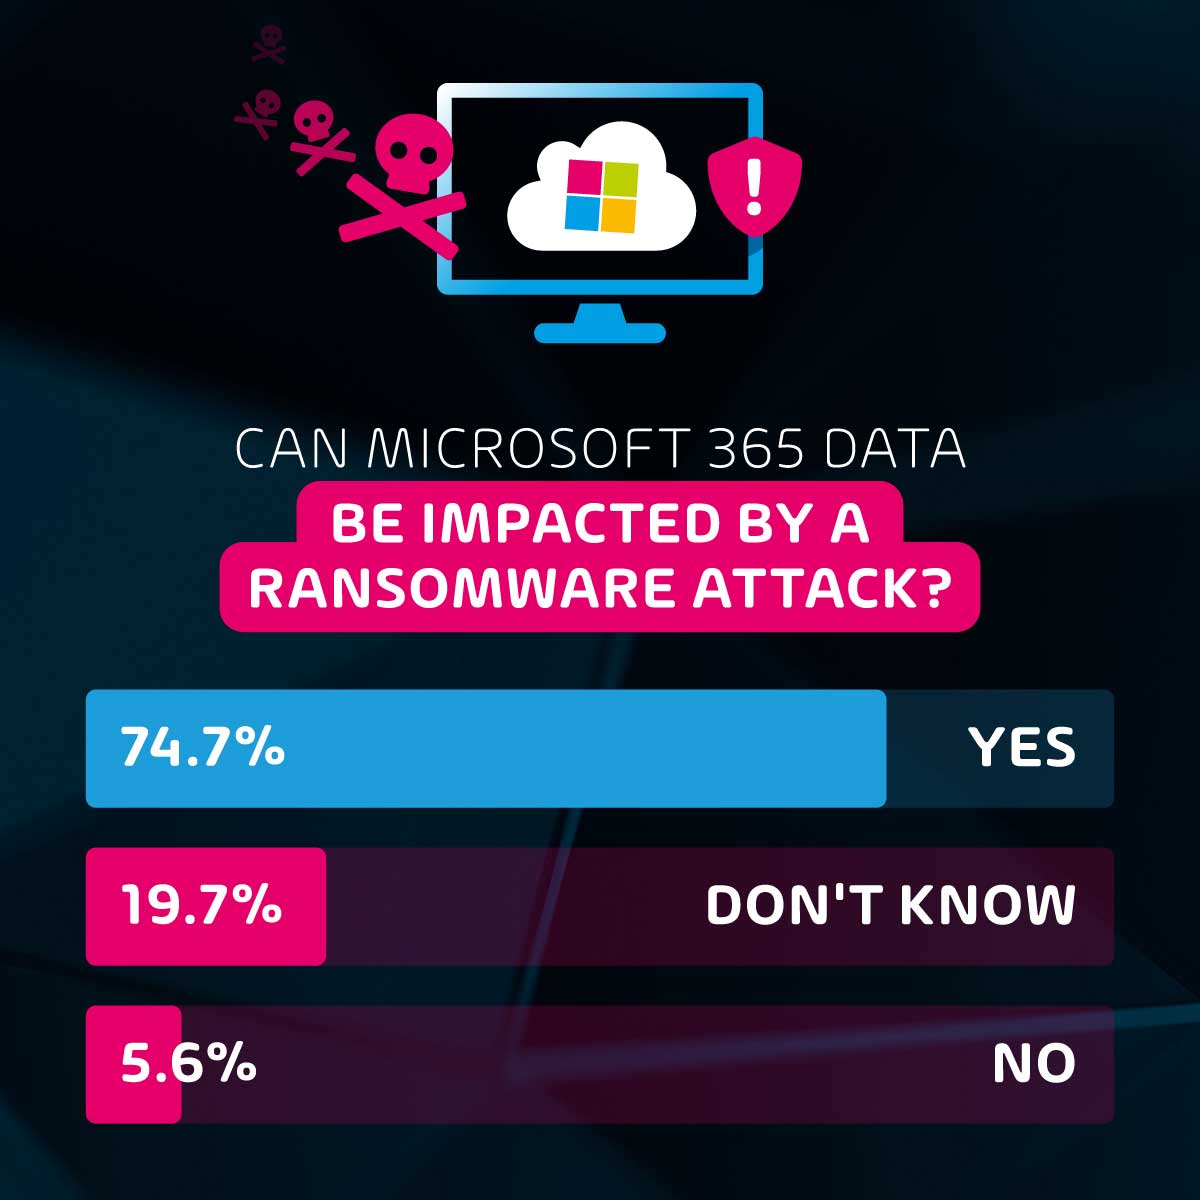 Can Ransomeware Attacks impact Microsoft 365?